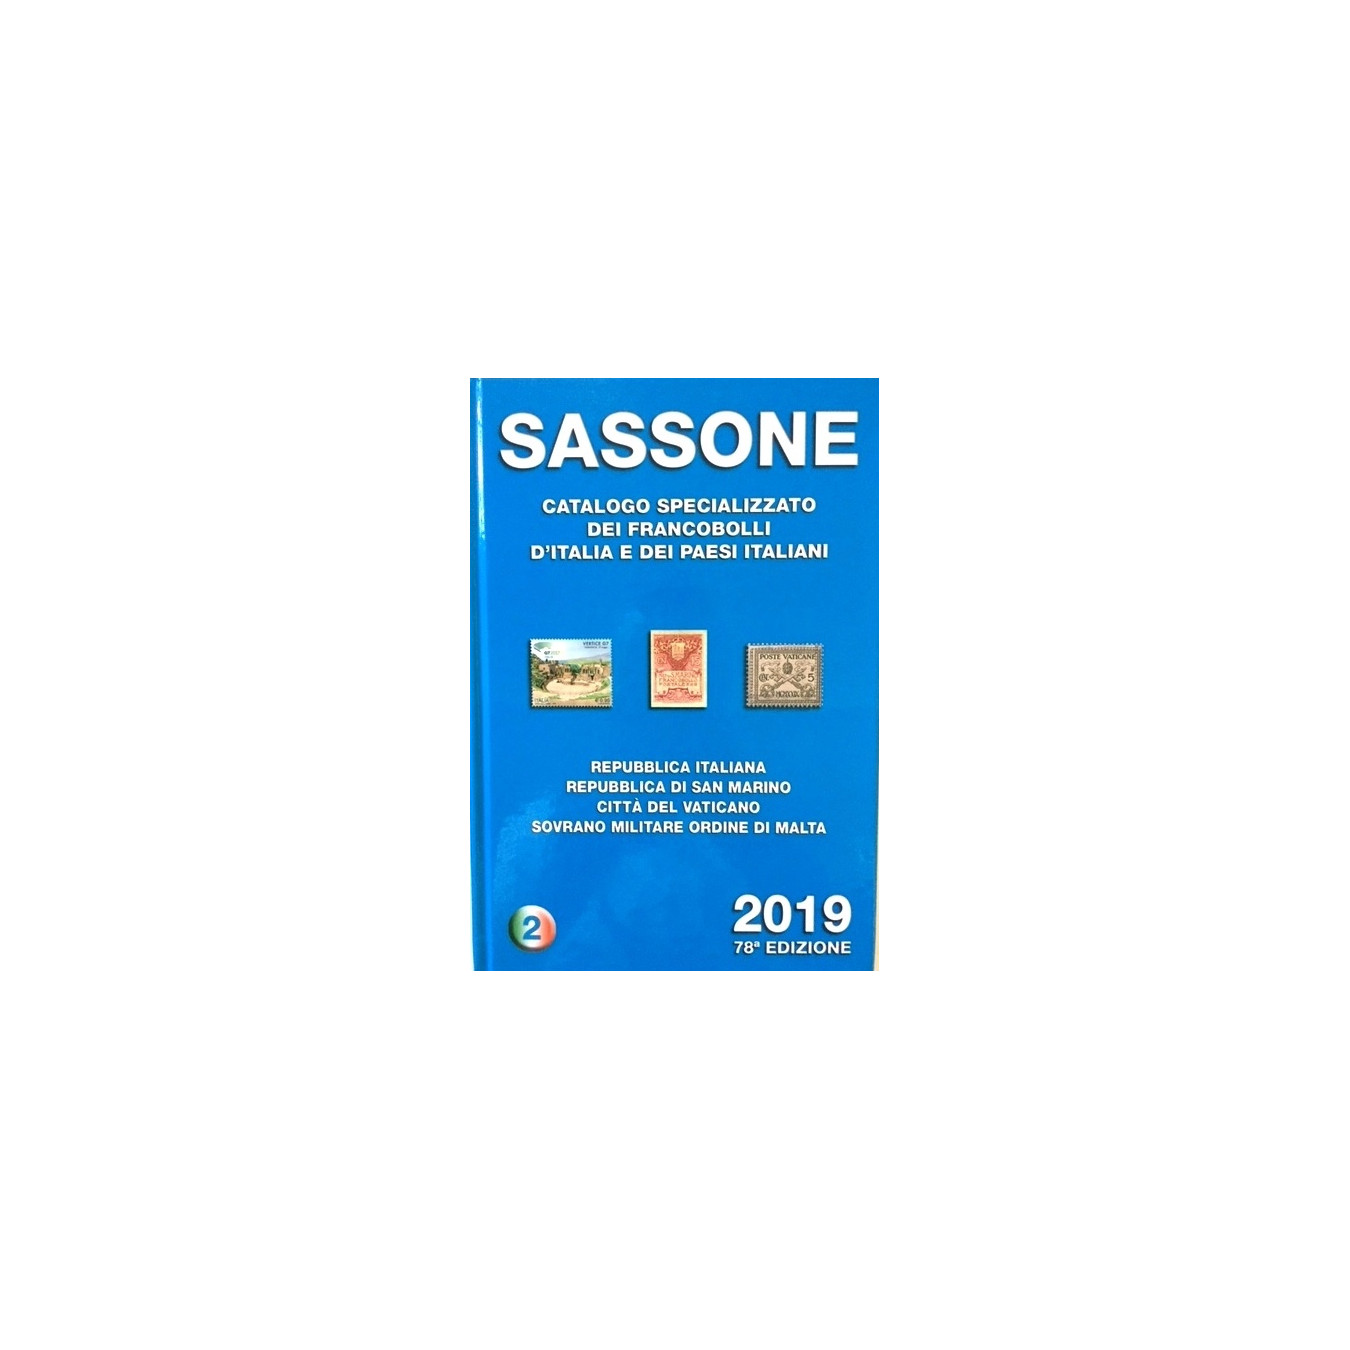 Catalogo sassone 2019 vol 2